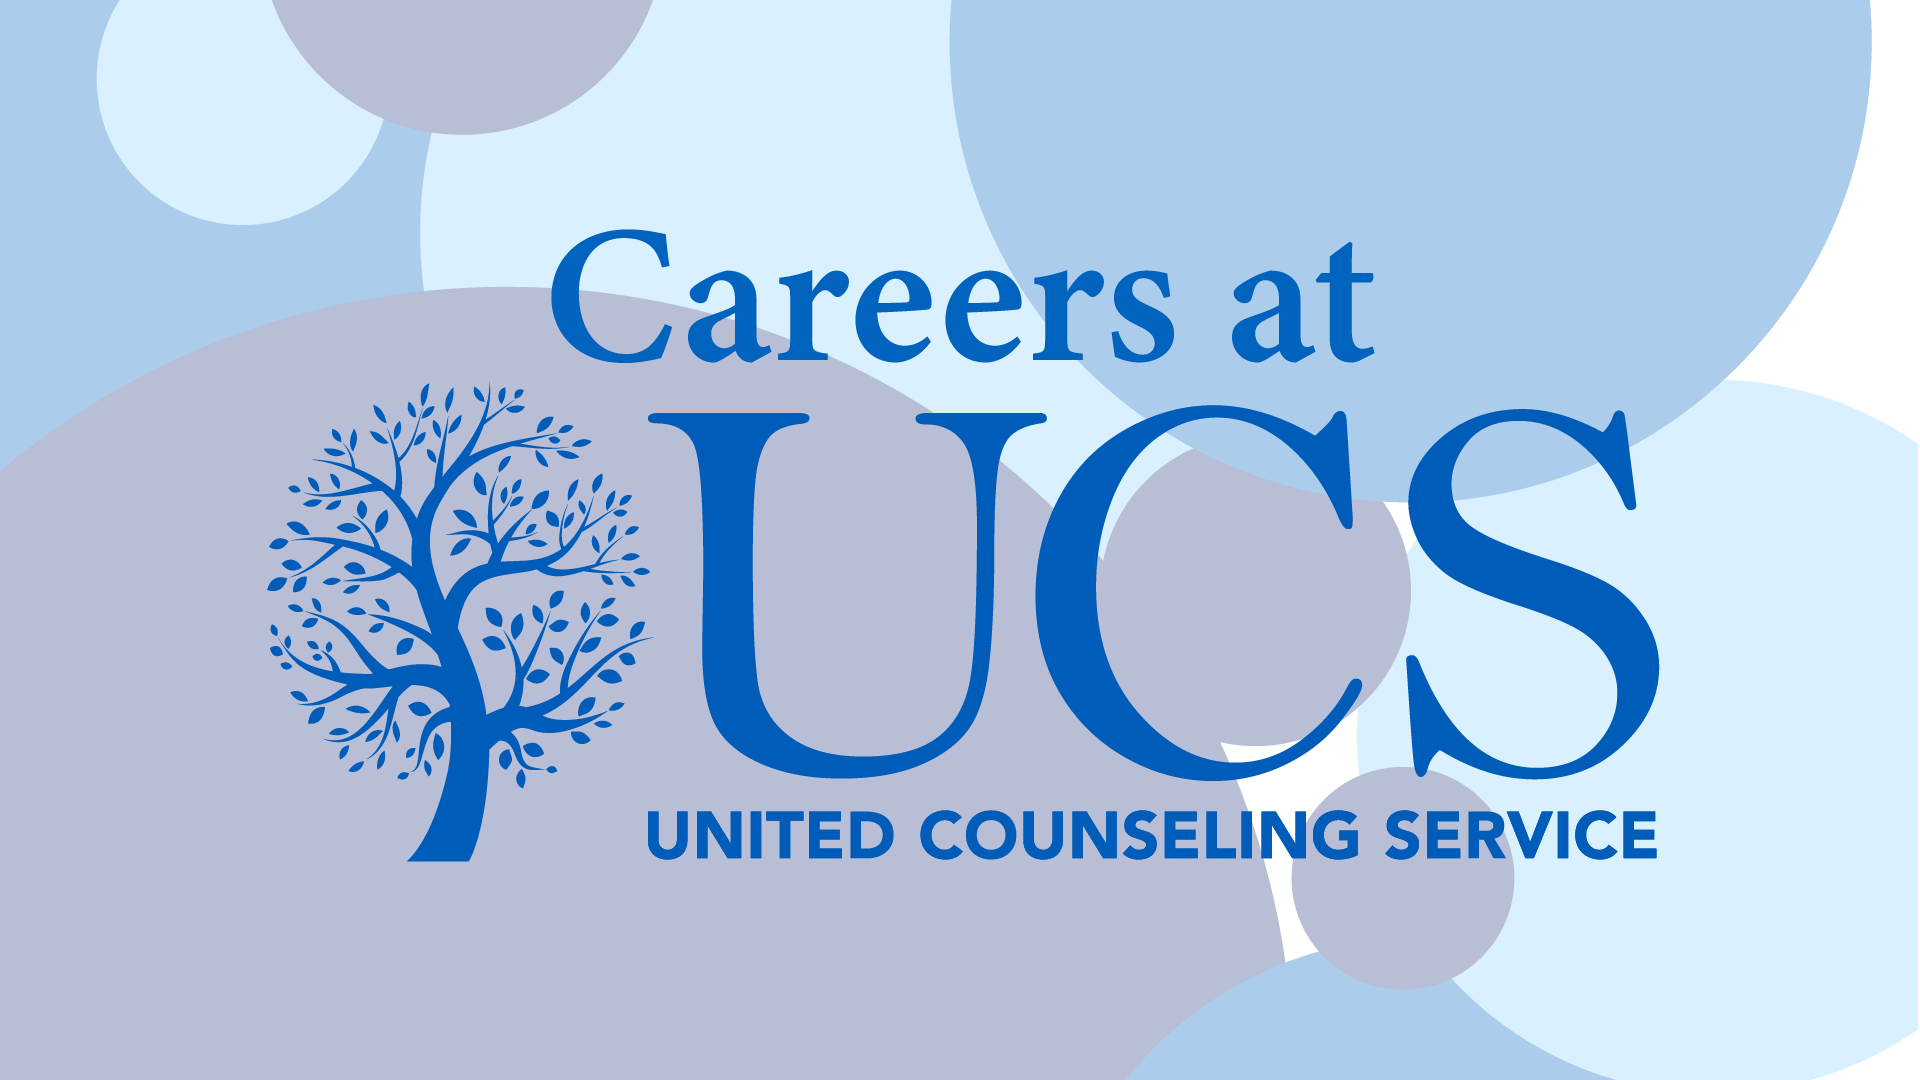 "Careers at UCS"